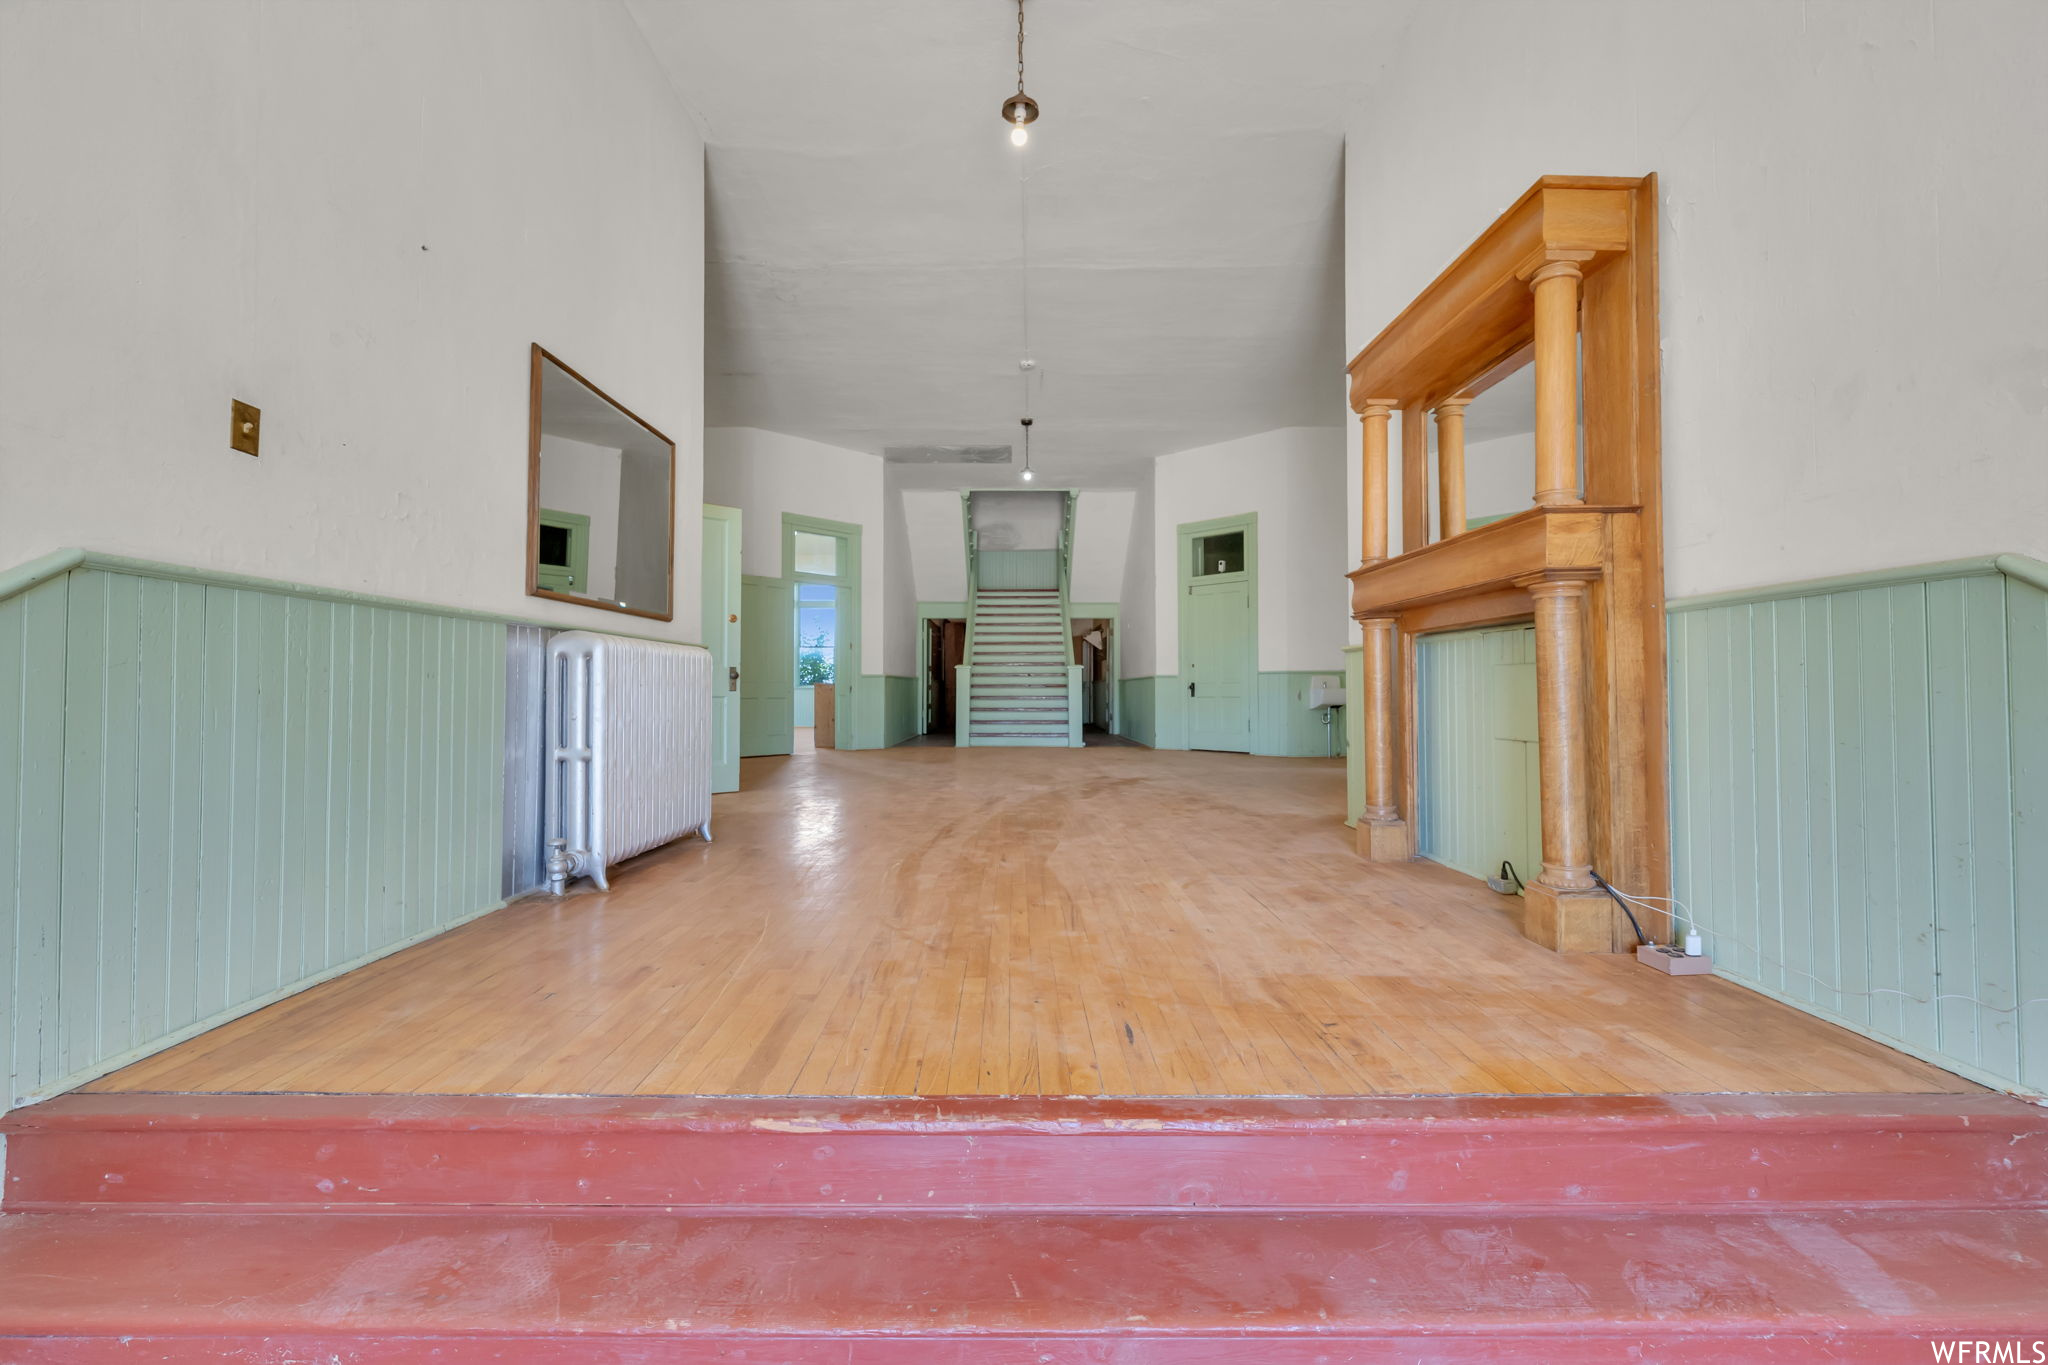 View of hardwood floor in entry. Mantel excluded.